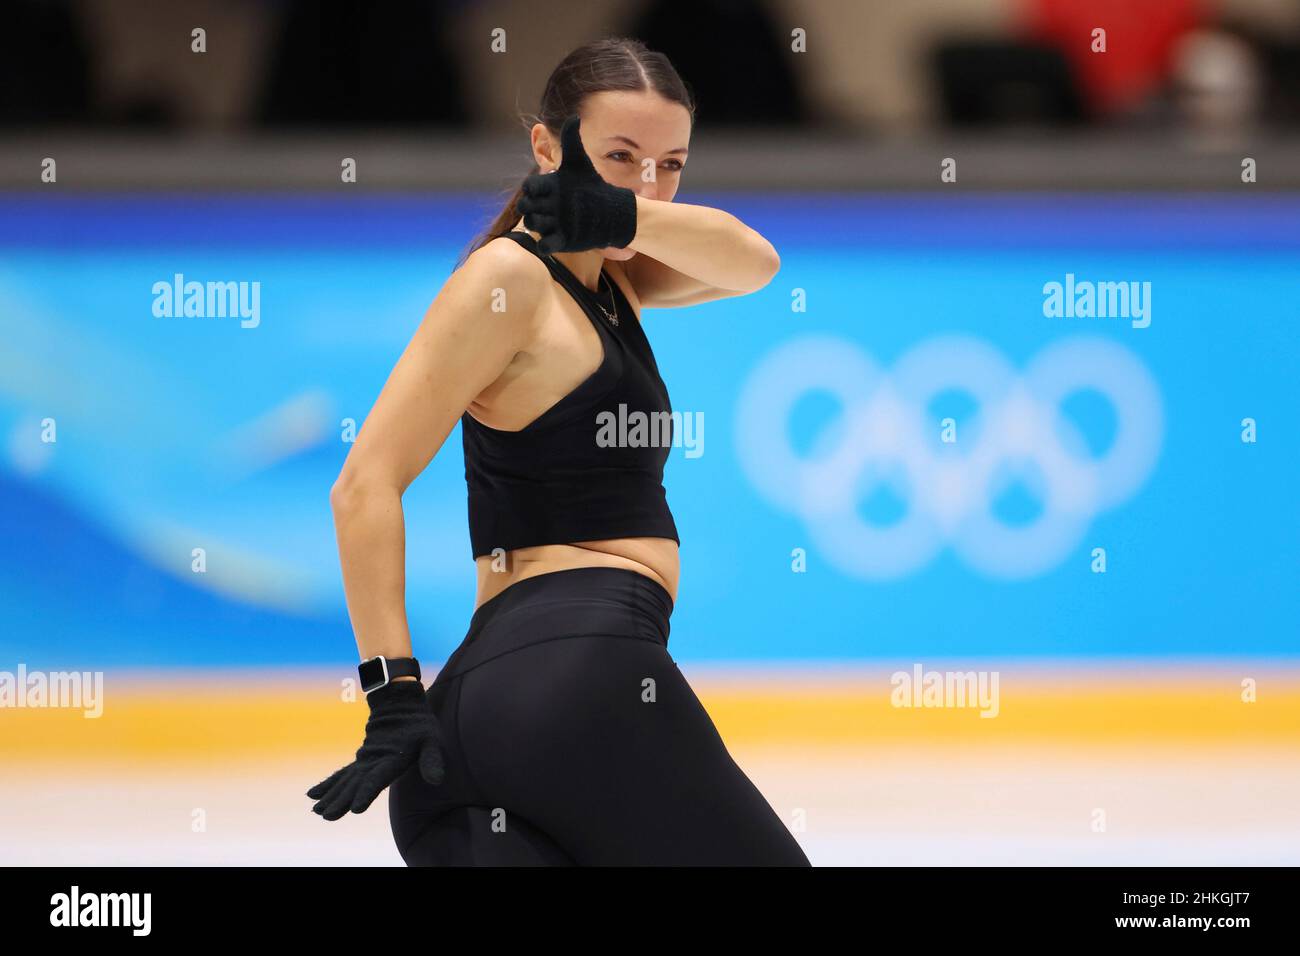 Nicole Schott (GER), Figure Skating, Action, FEBRUARY 3, 2022 - Figure  Skating : Women's practice during the Beijing 2022 Olympic Winter Games at  Capital Indoor Stadium in Beijing, China. 24th Olympic Winter